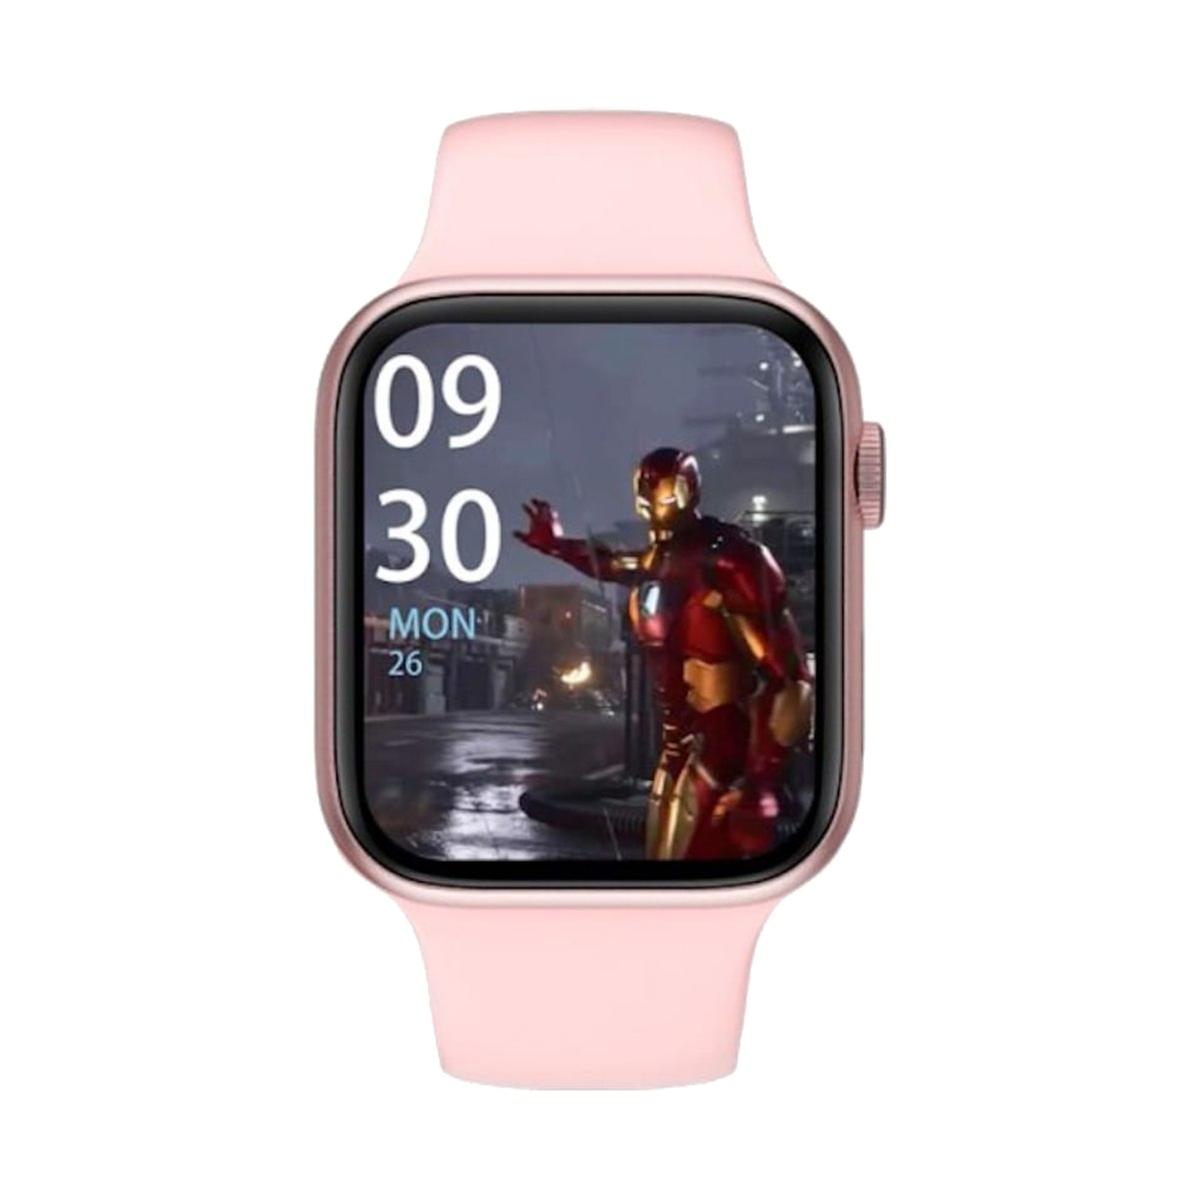 Smartwatch Reloj inteligente W26 rosa | Relojes | Toys"R"Us España